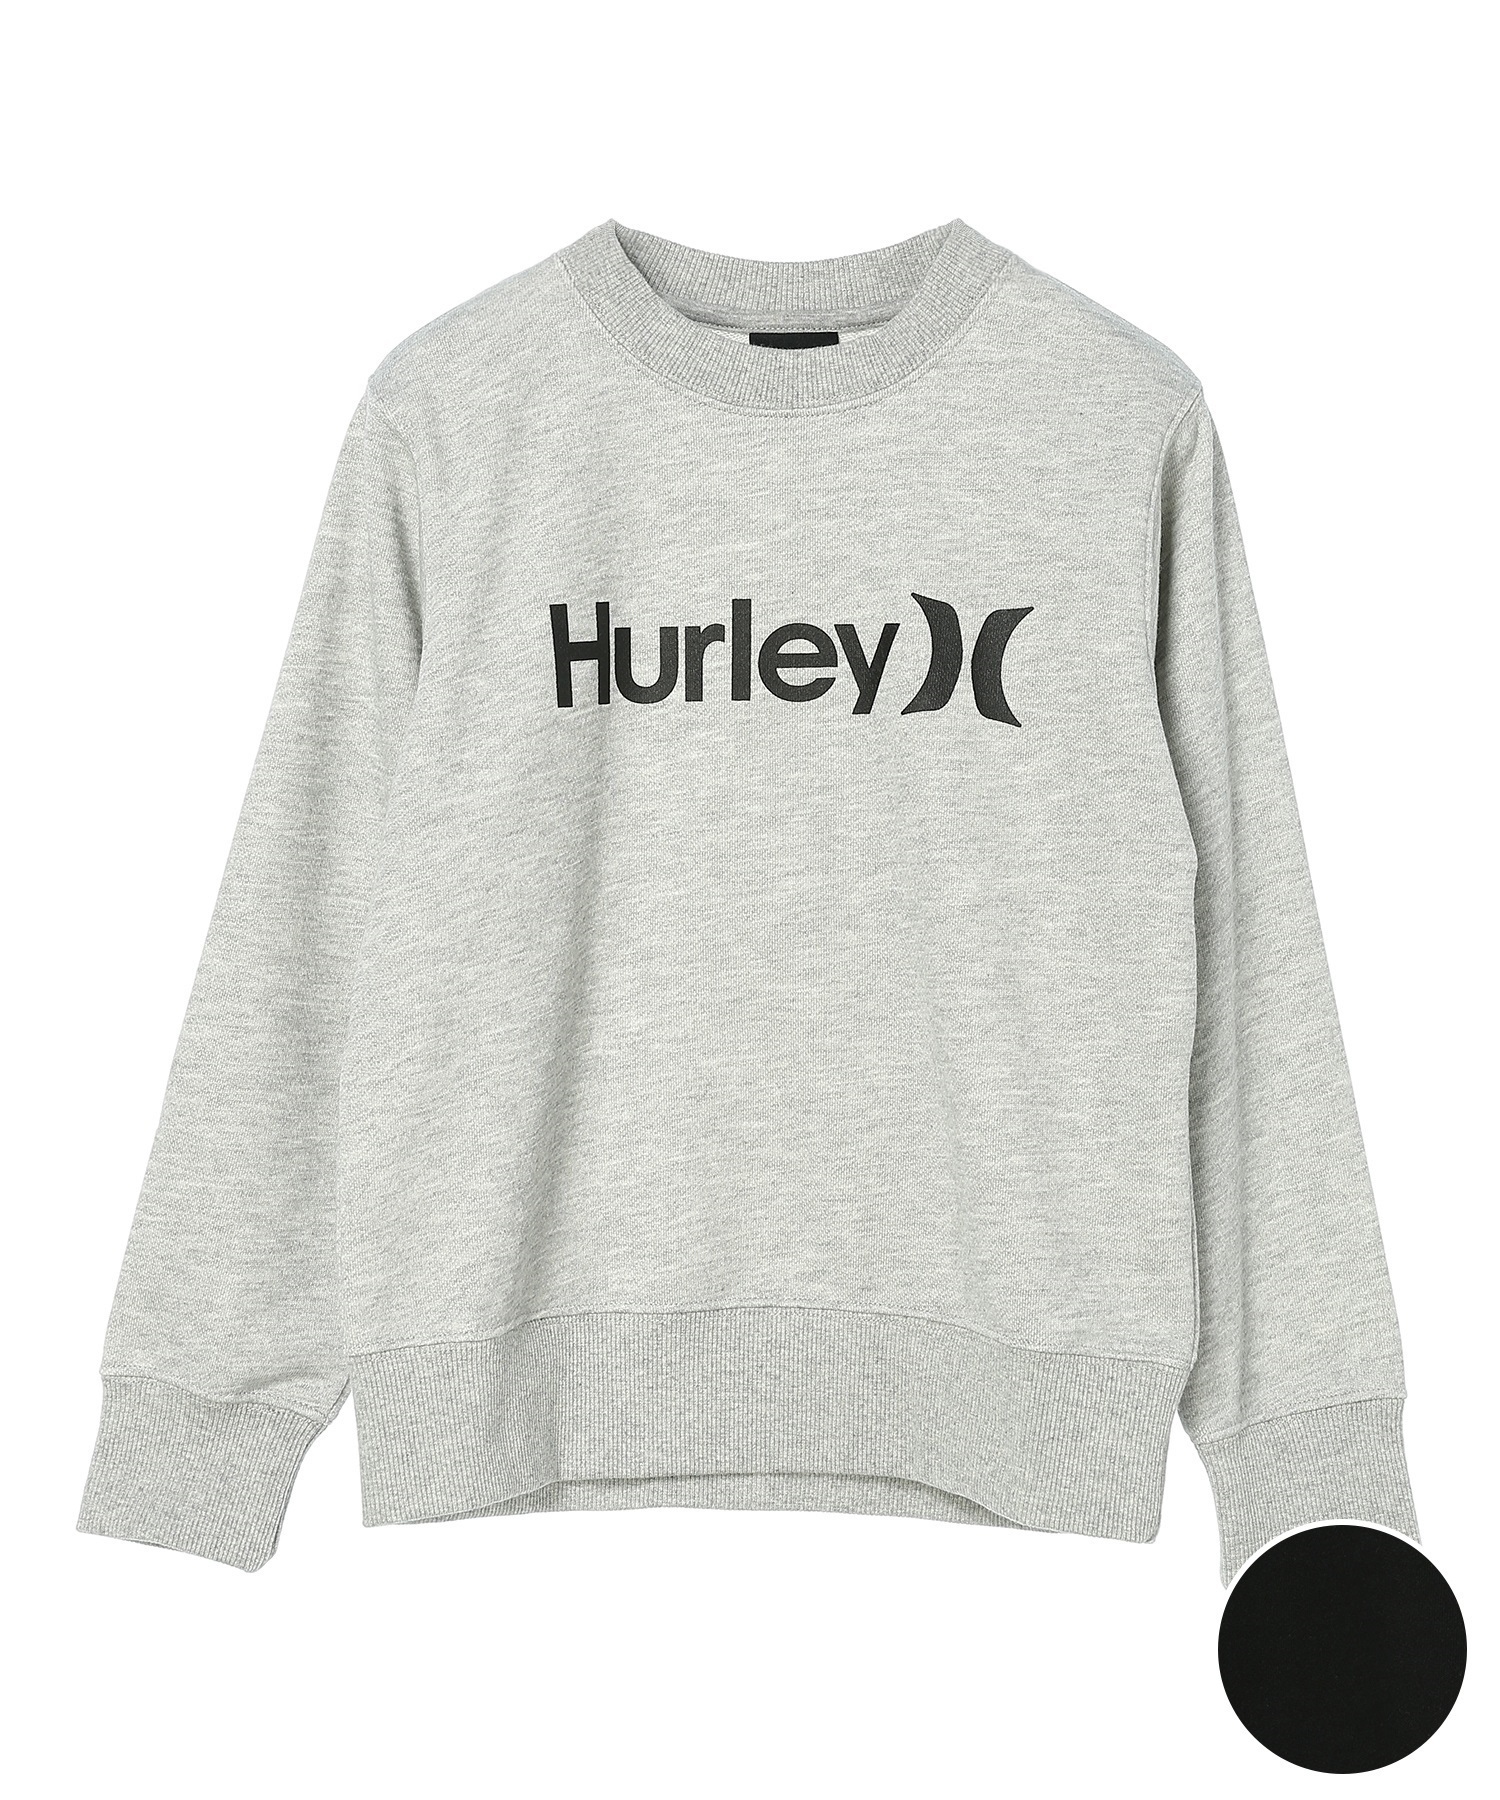 Hurley ハーレー LOGO BFL2332013 キッズ トレーナー ロングスリーブ